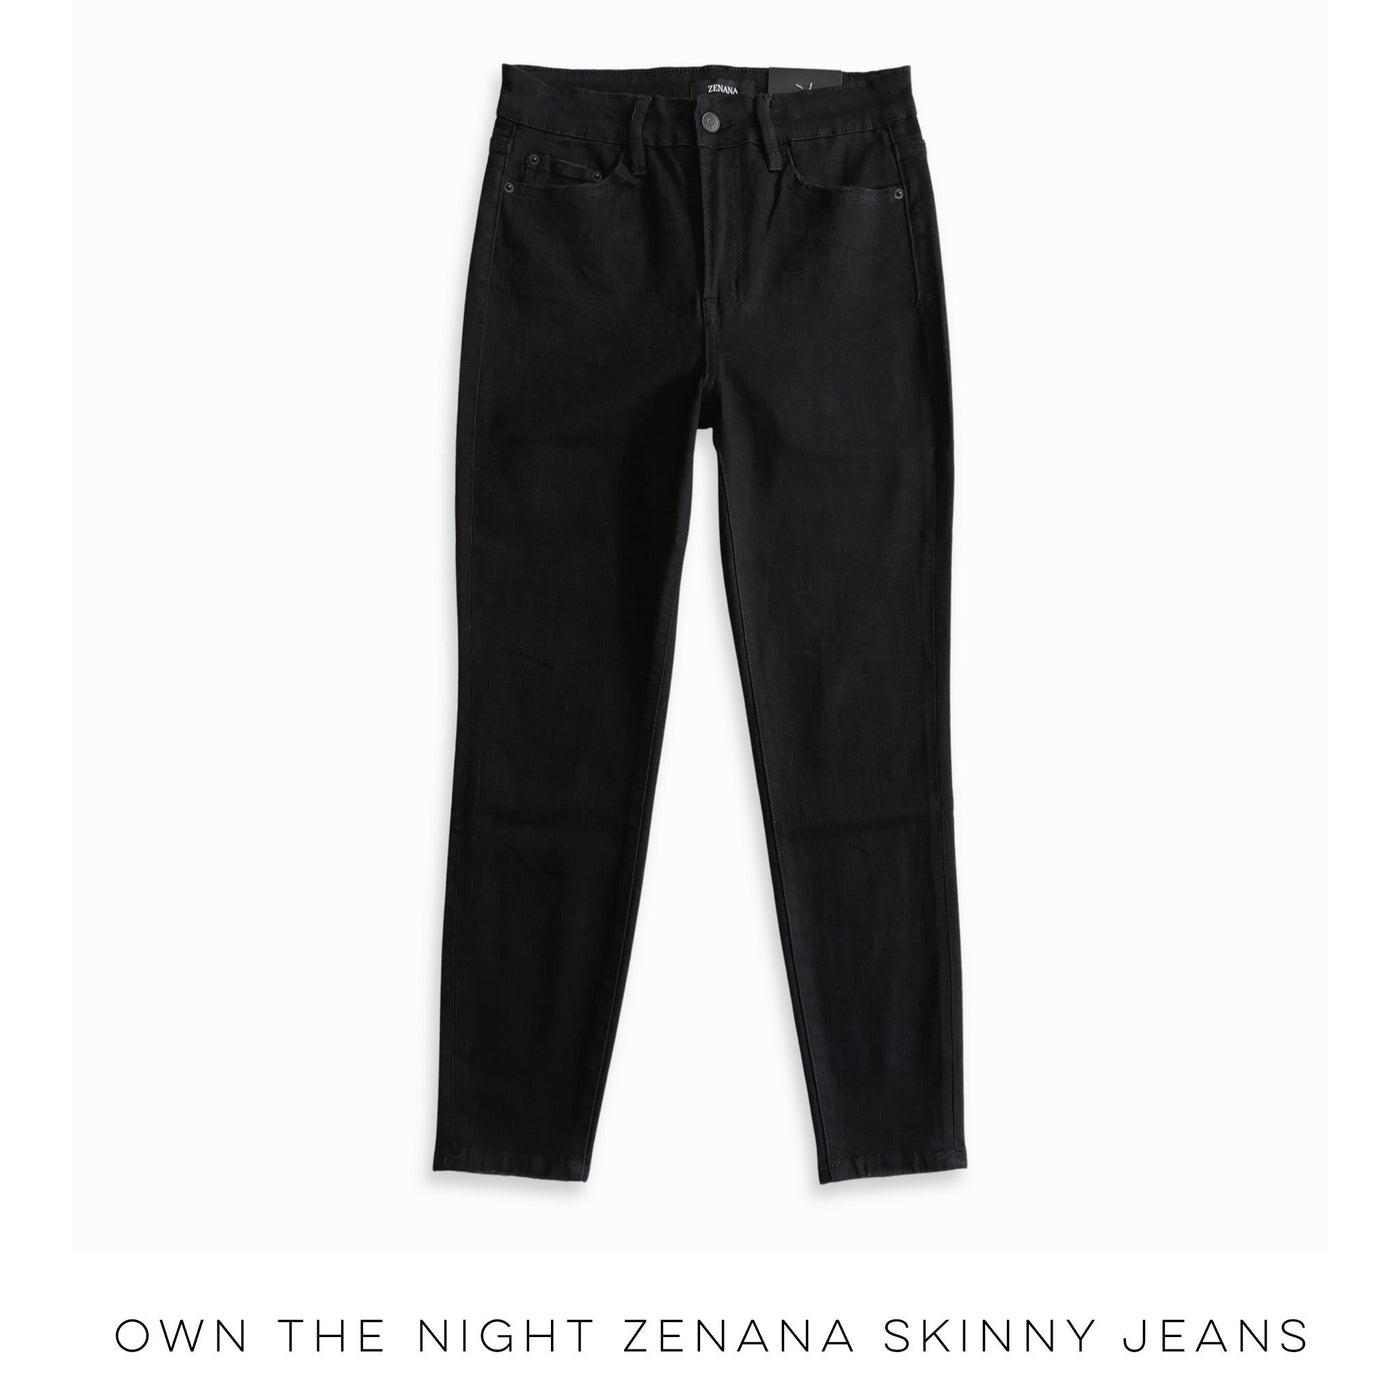 Own the Night Zenana Skinny Jeans - Copper + Rose